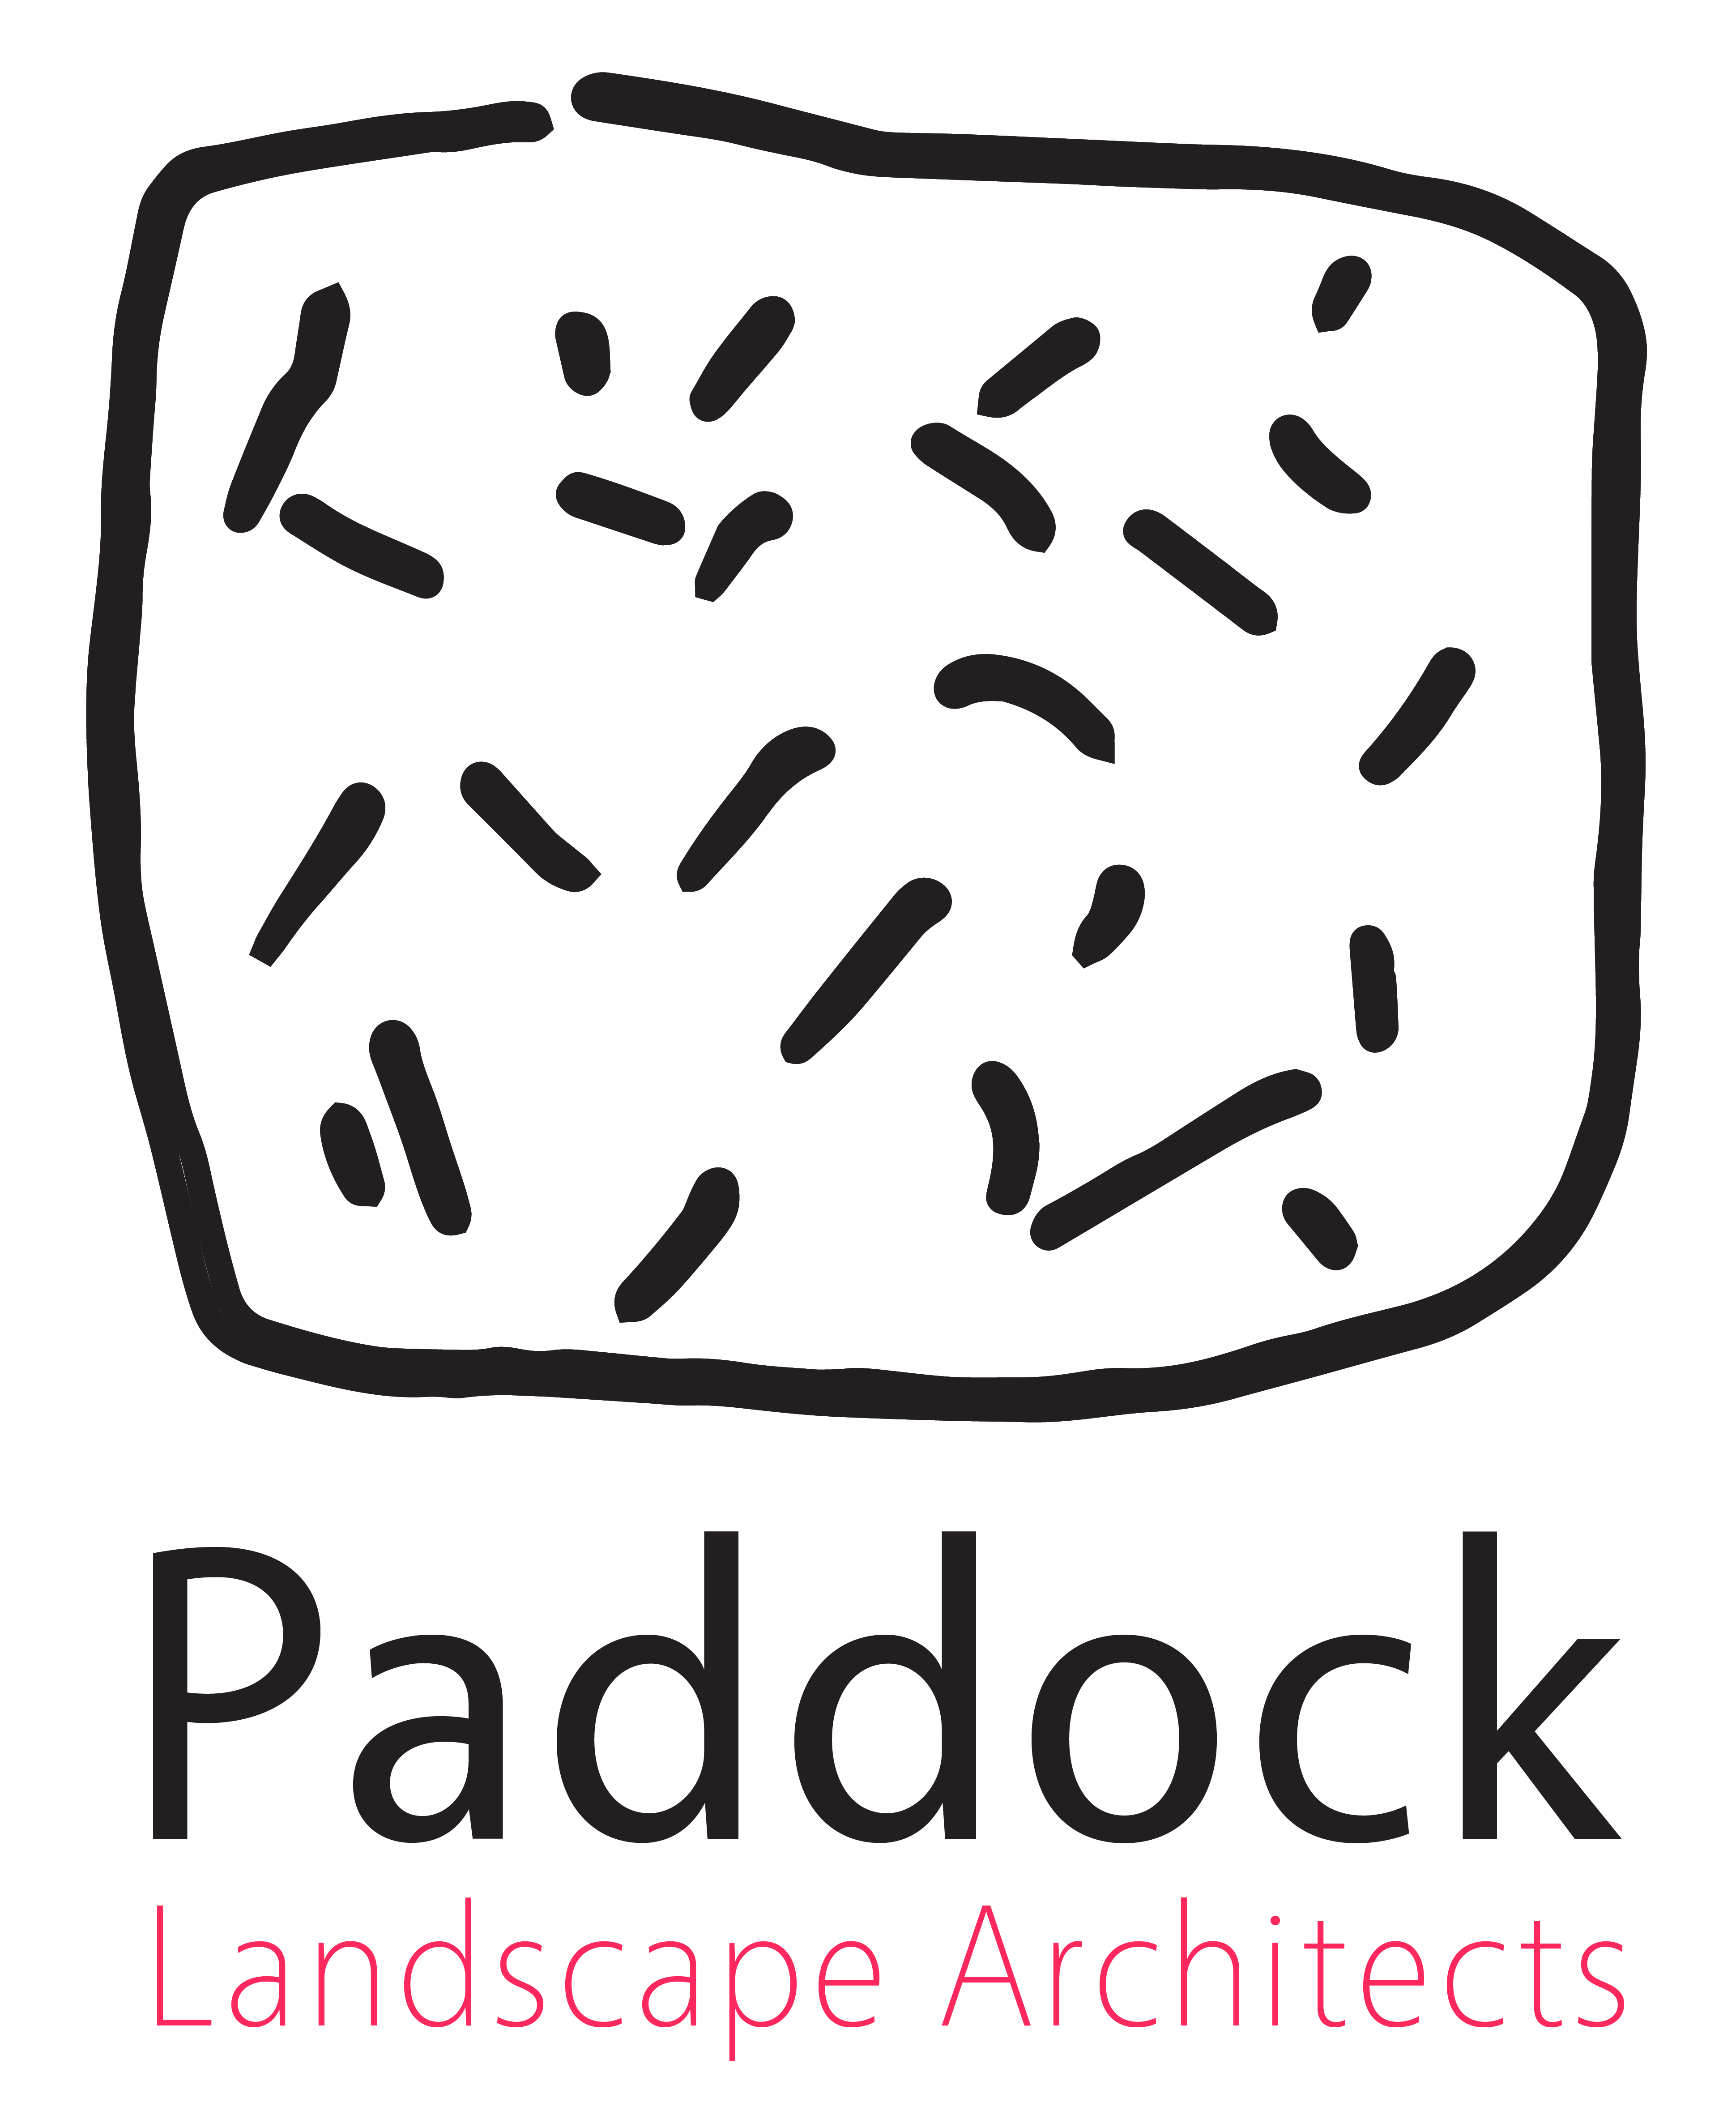 Paddock Landscape Architects